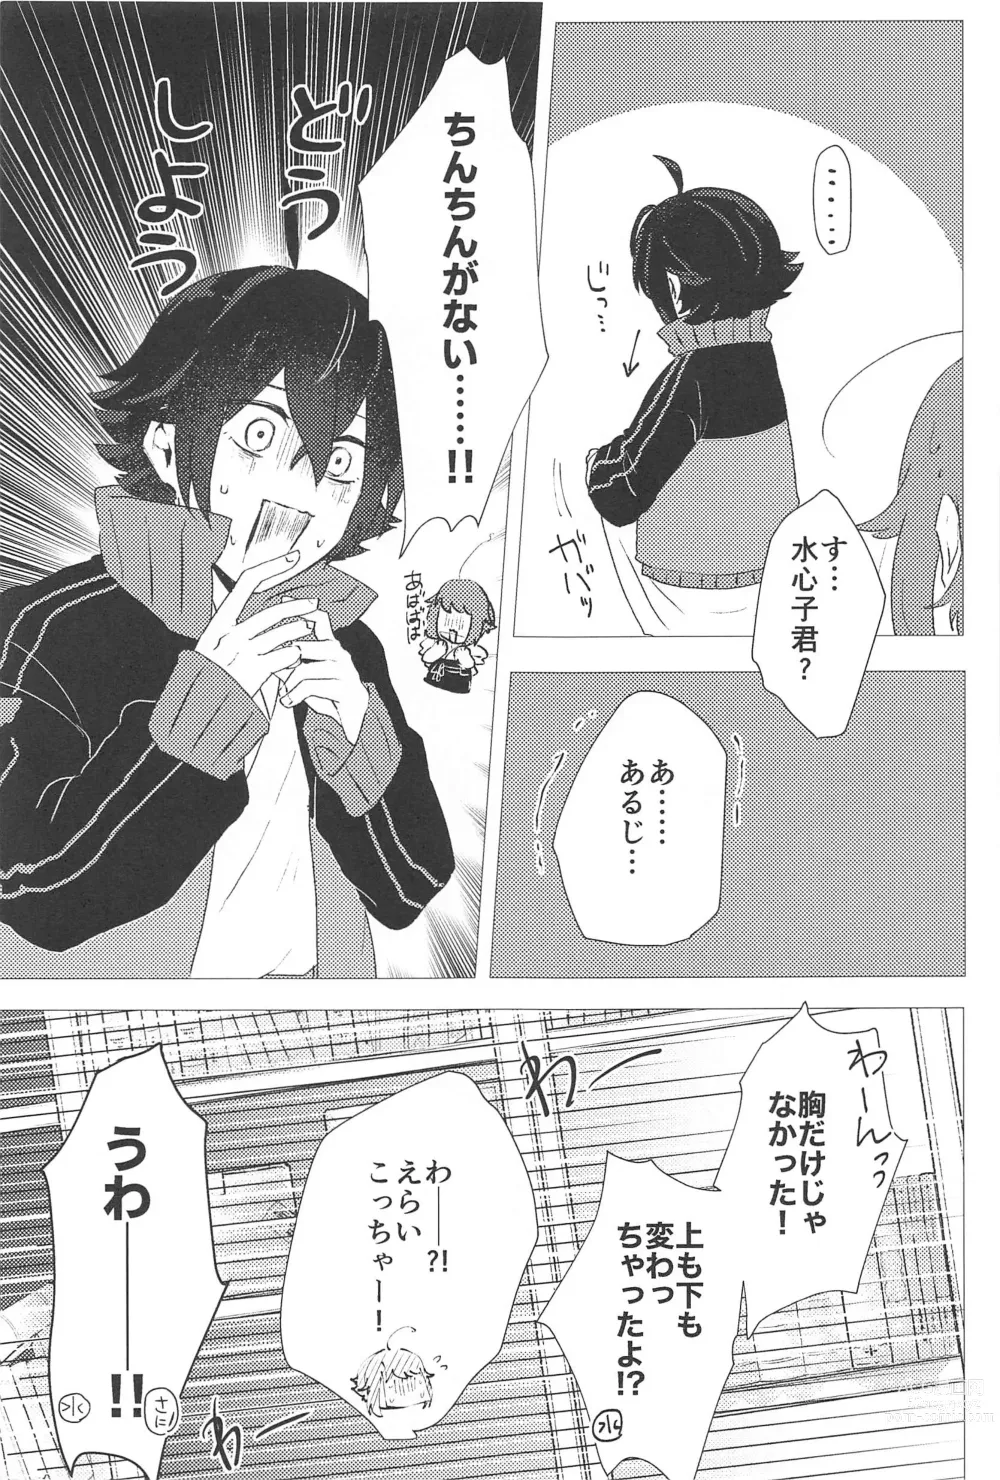 Page 10 of doujinshi Konnanotte Nai!